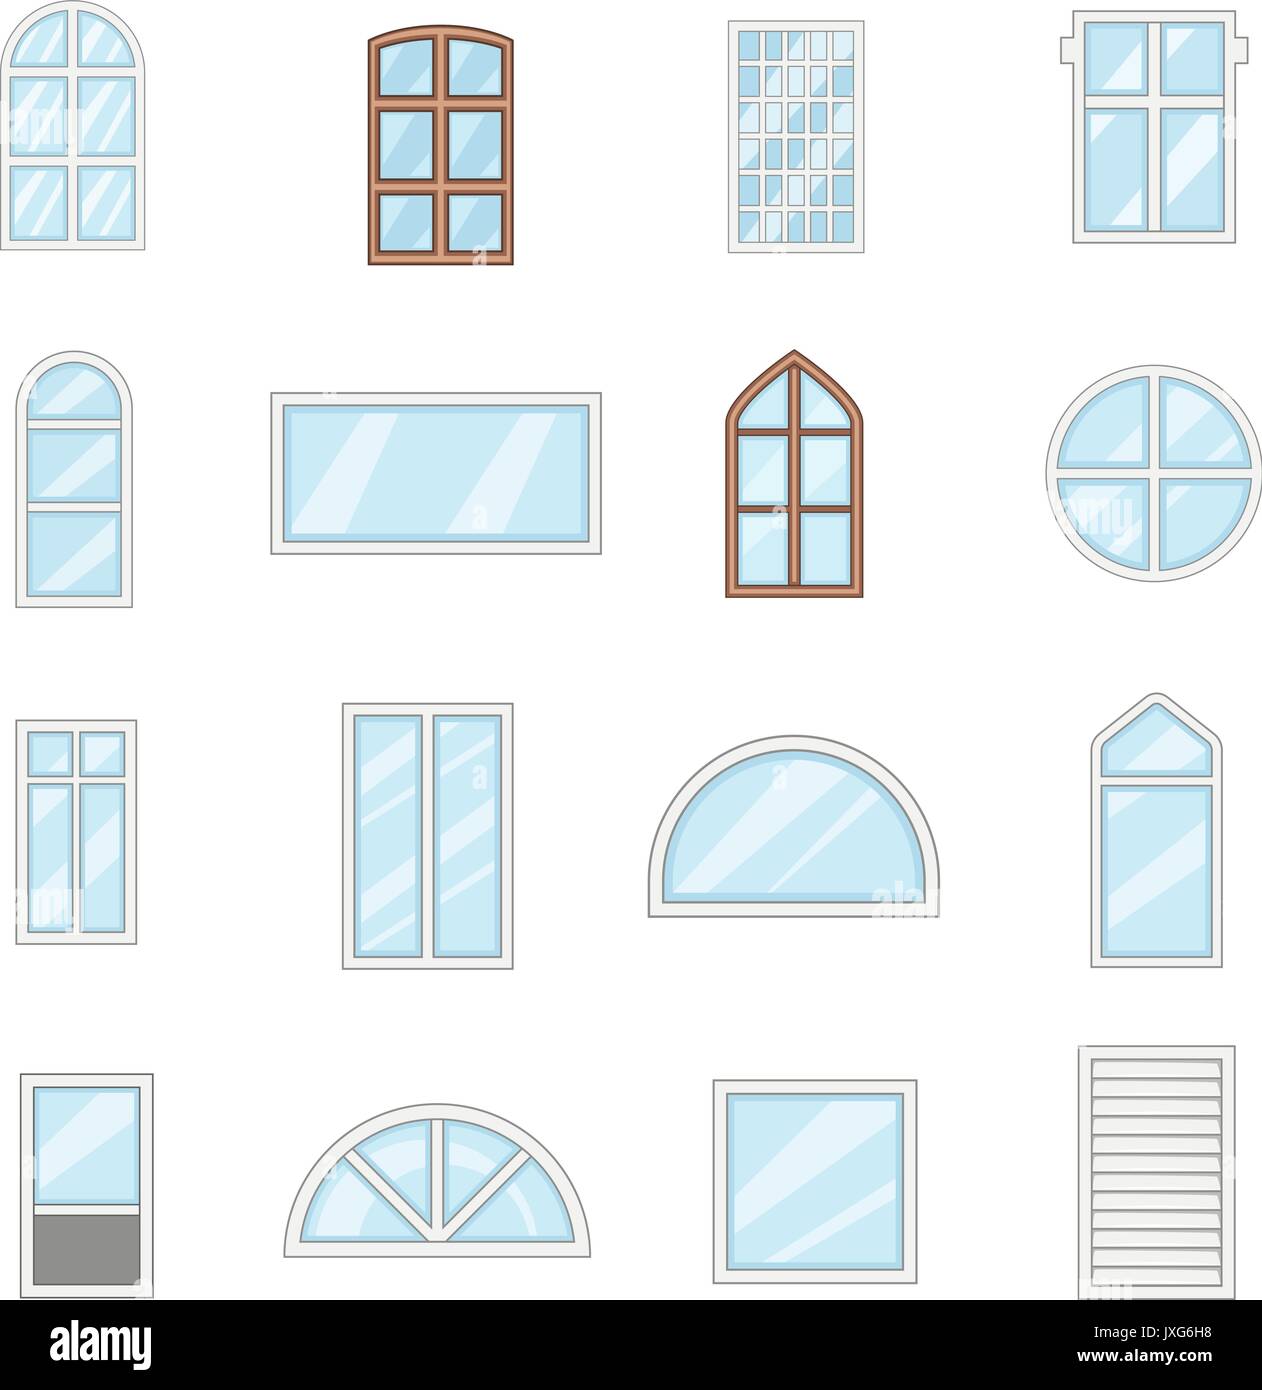 Fenster design Arten Symbole, Cartoon Stil Stock-Vektorgrafik - Alamy